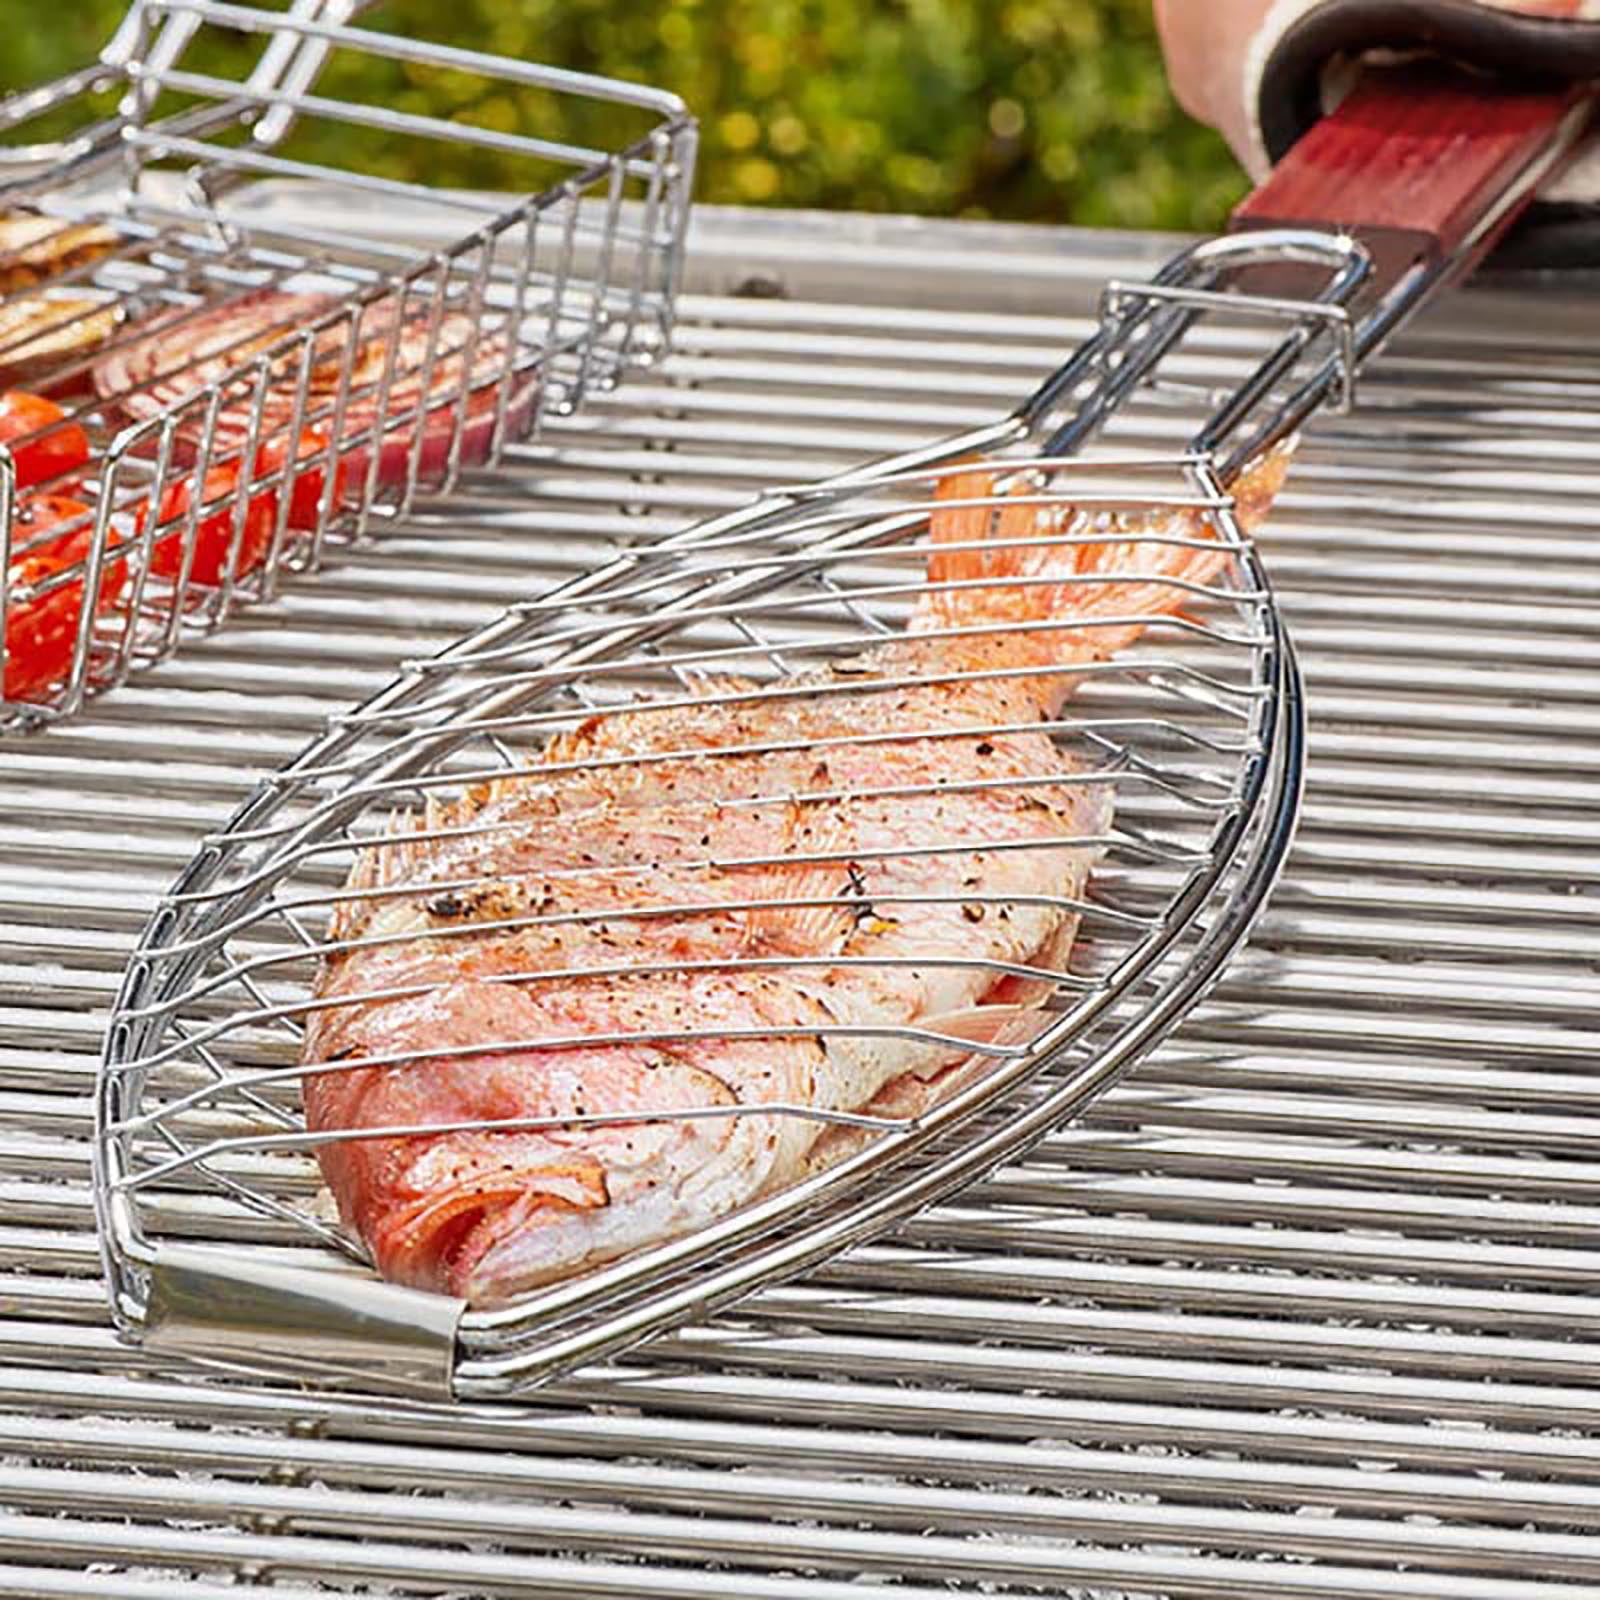 Midsumdr Outdoor Grill Fish Grilling Basket-Folding Portable